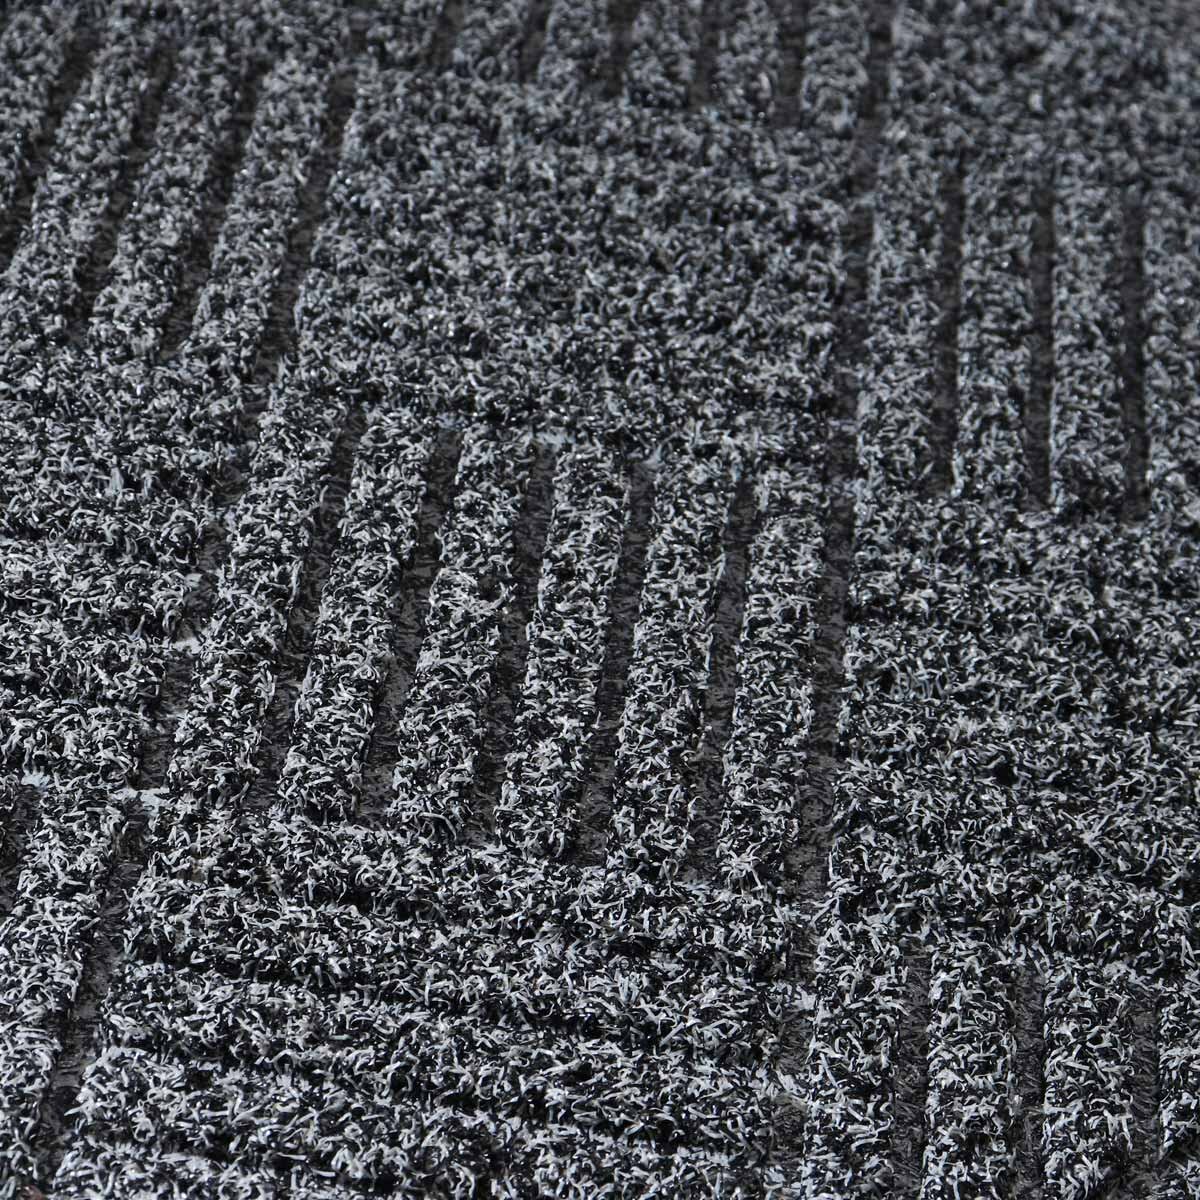 Close up image of mat pattern